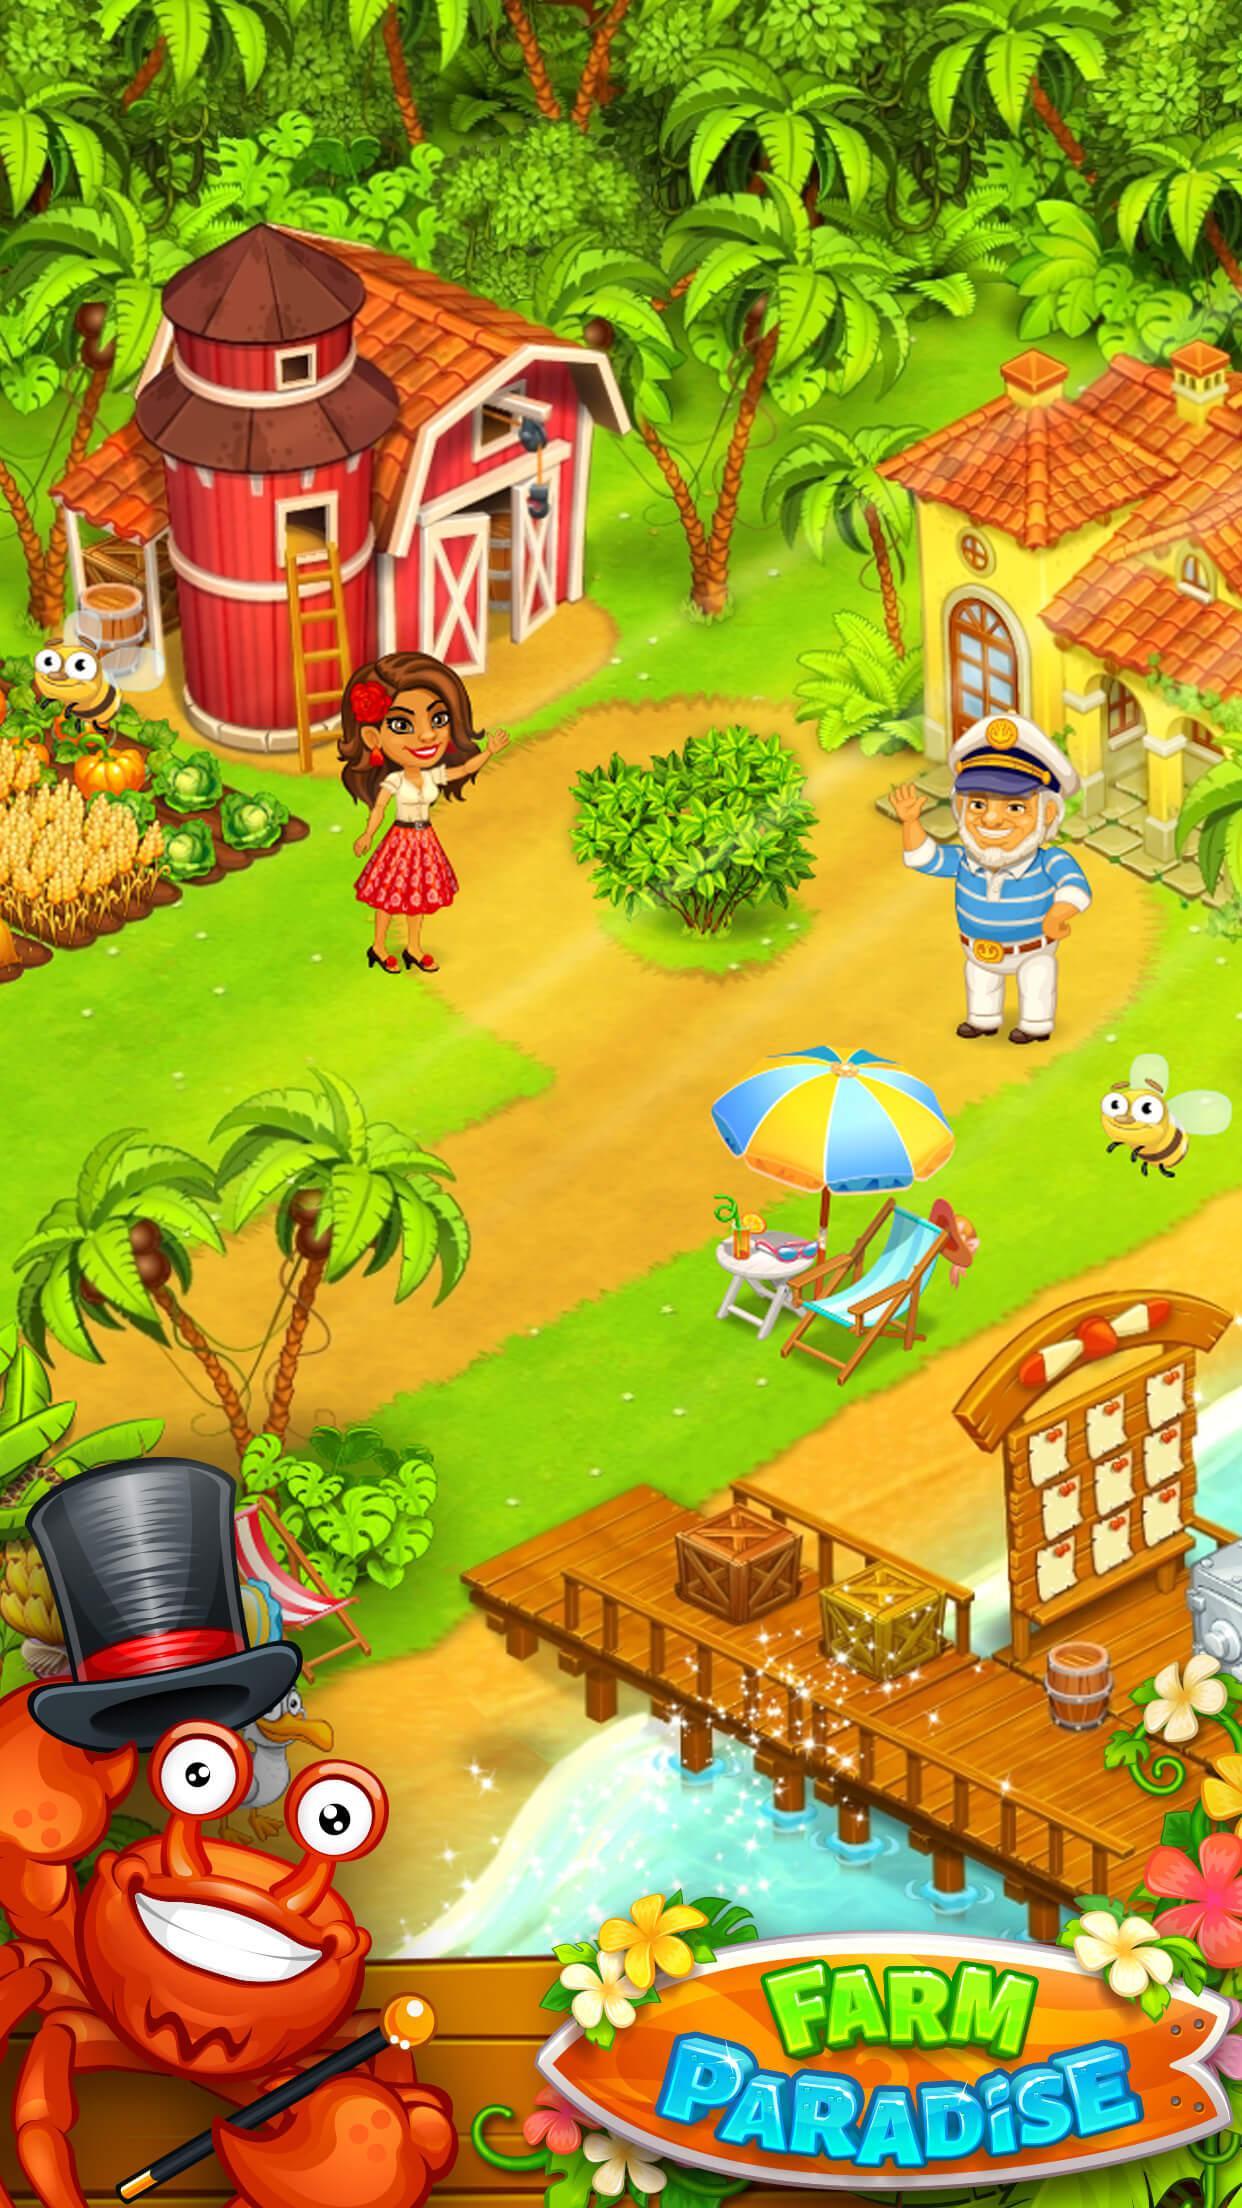 Farm Paradise Fun farm trade game at lost island 2.17 Screenshot 17